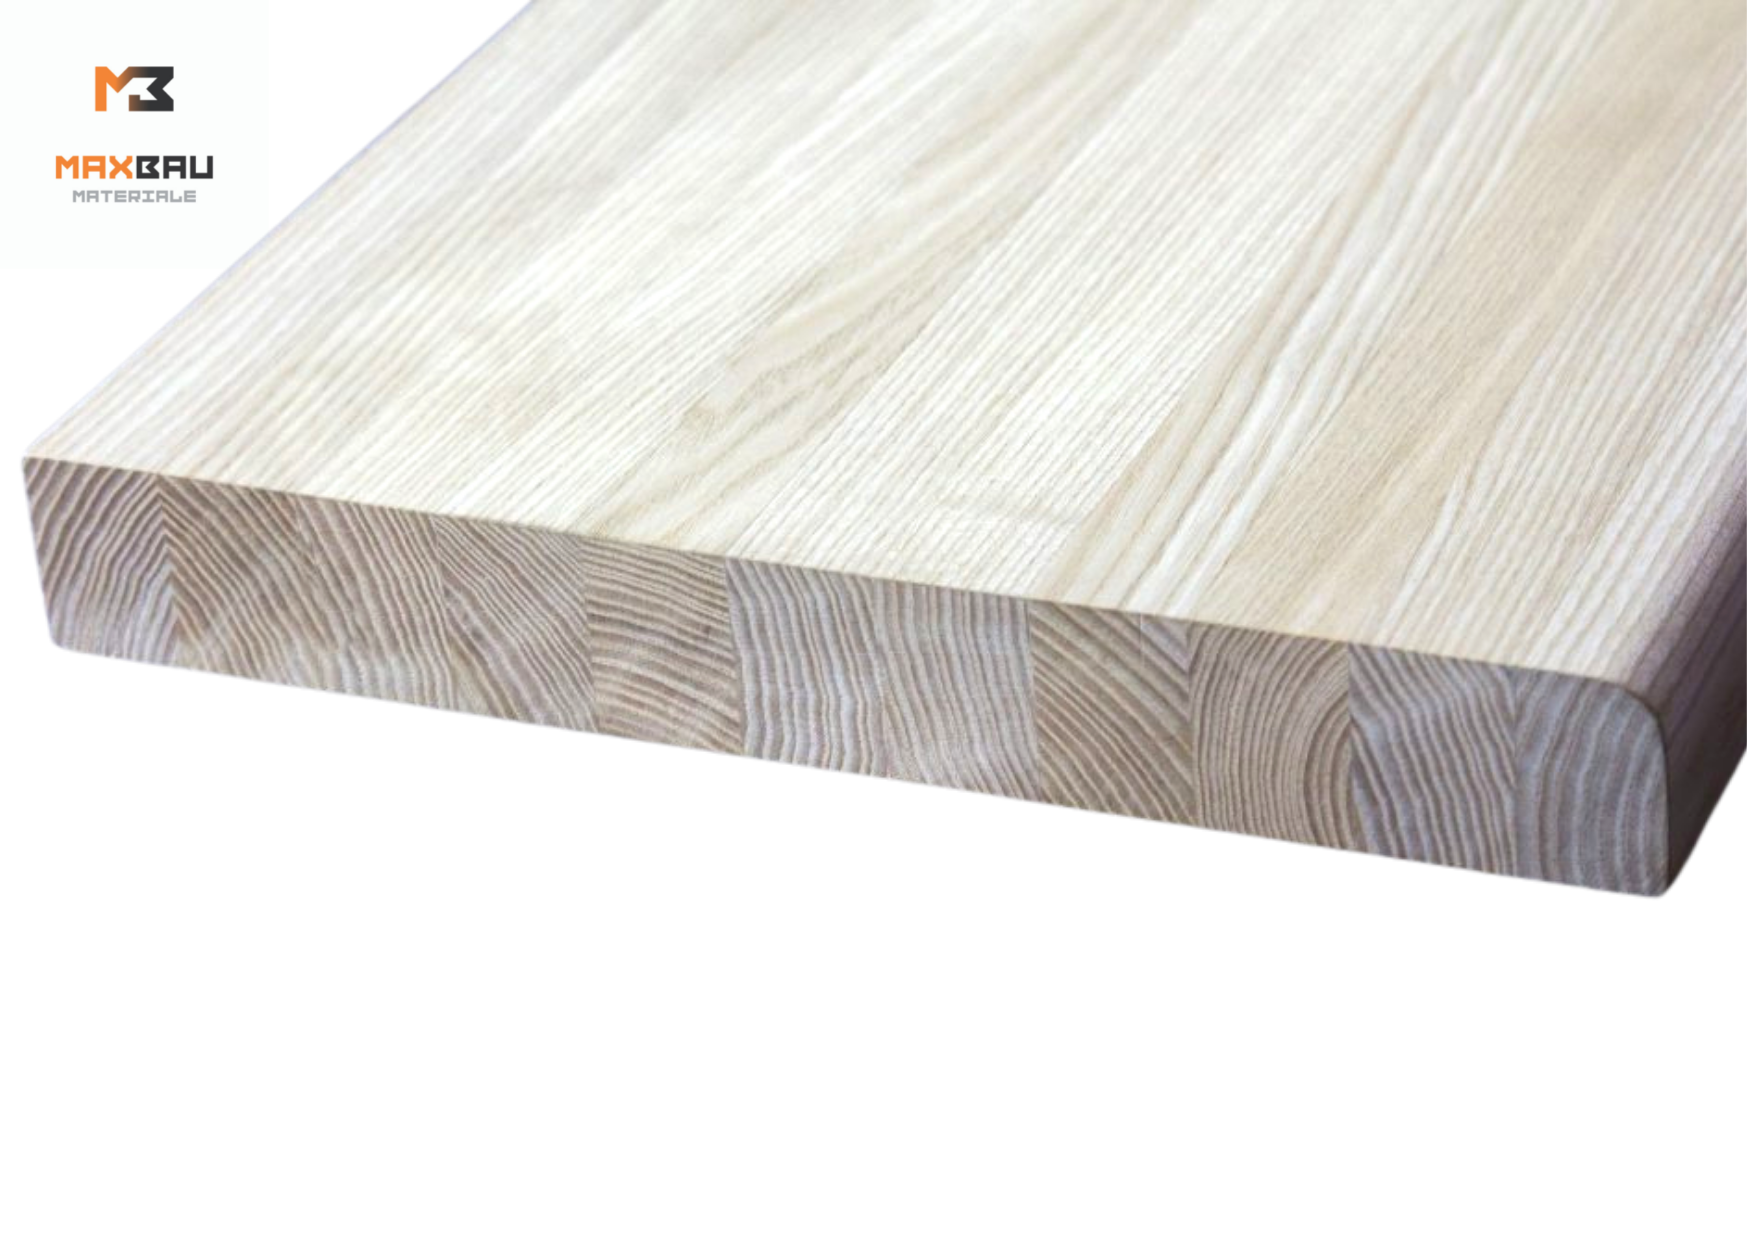 Placi din lemn incleiat - Placa de lemn incleiat MaxBau 2500 x 200 x 28 mm Clasa AB, https:maxbau.ro